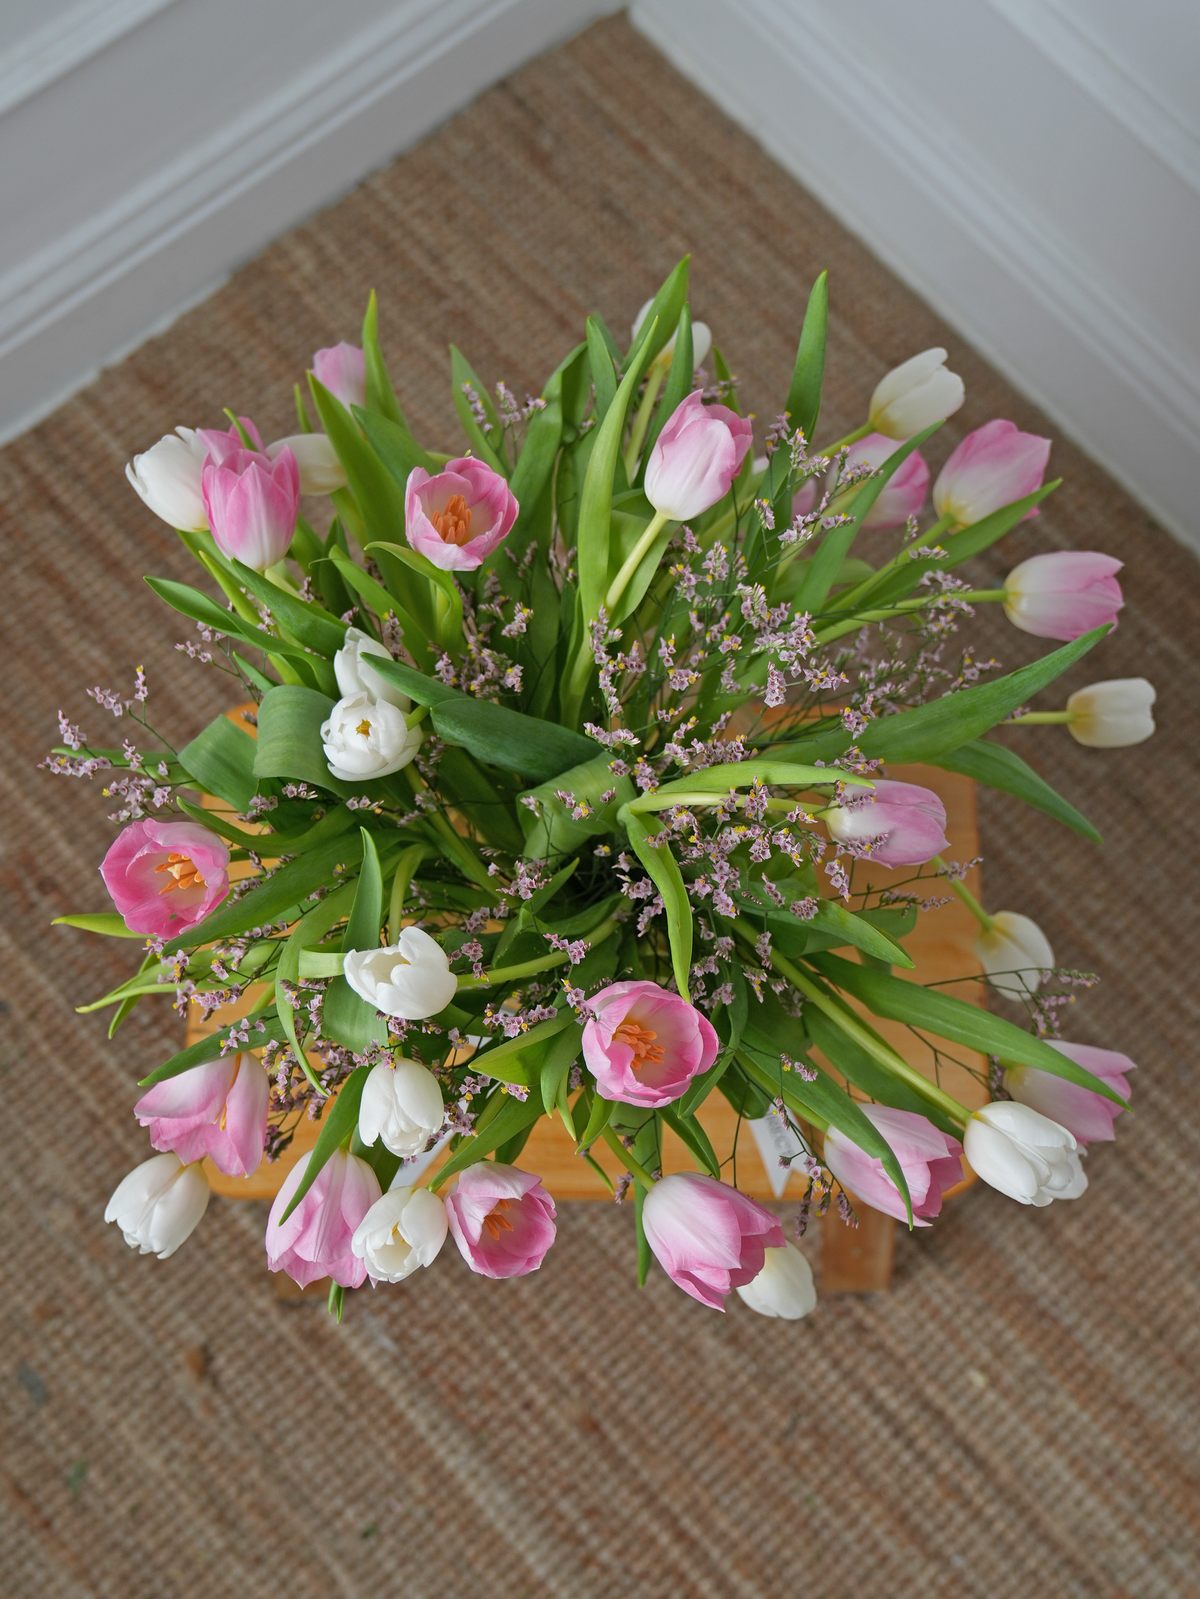 Mixed Tulips - Vase